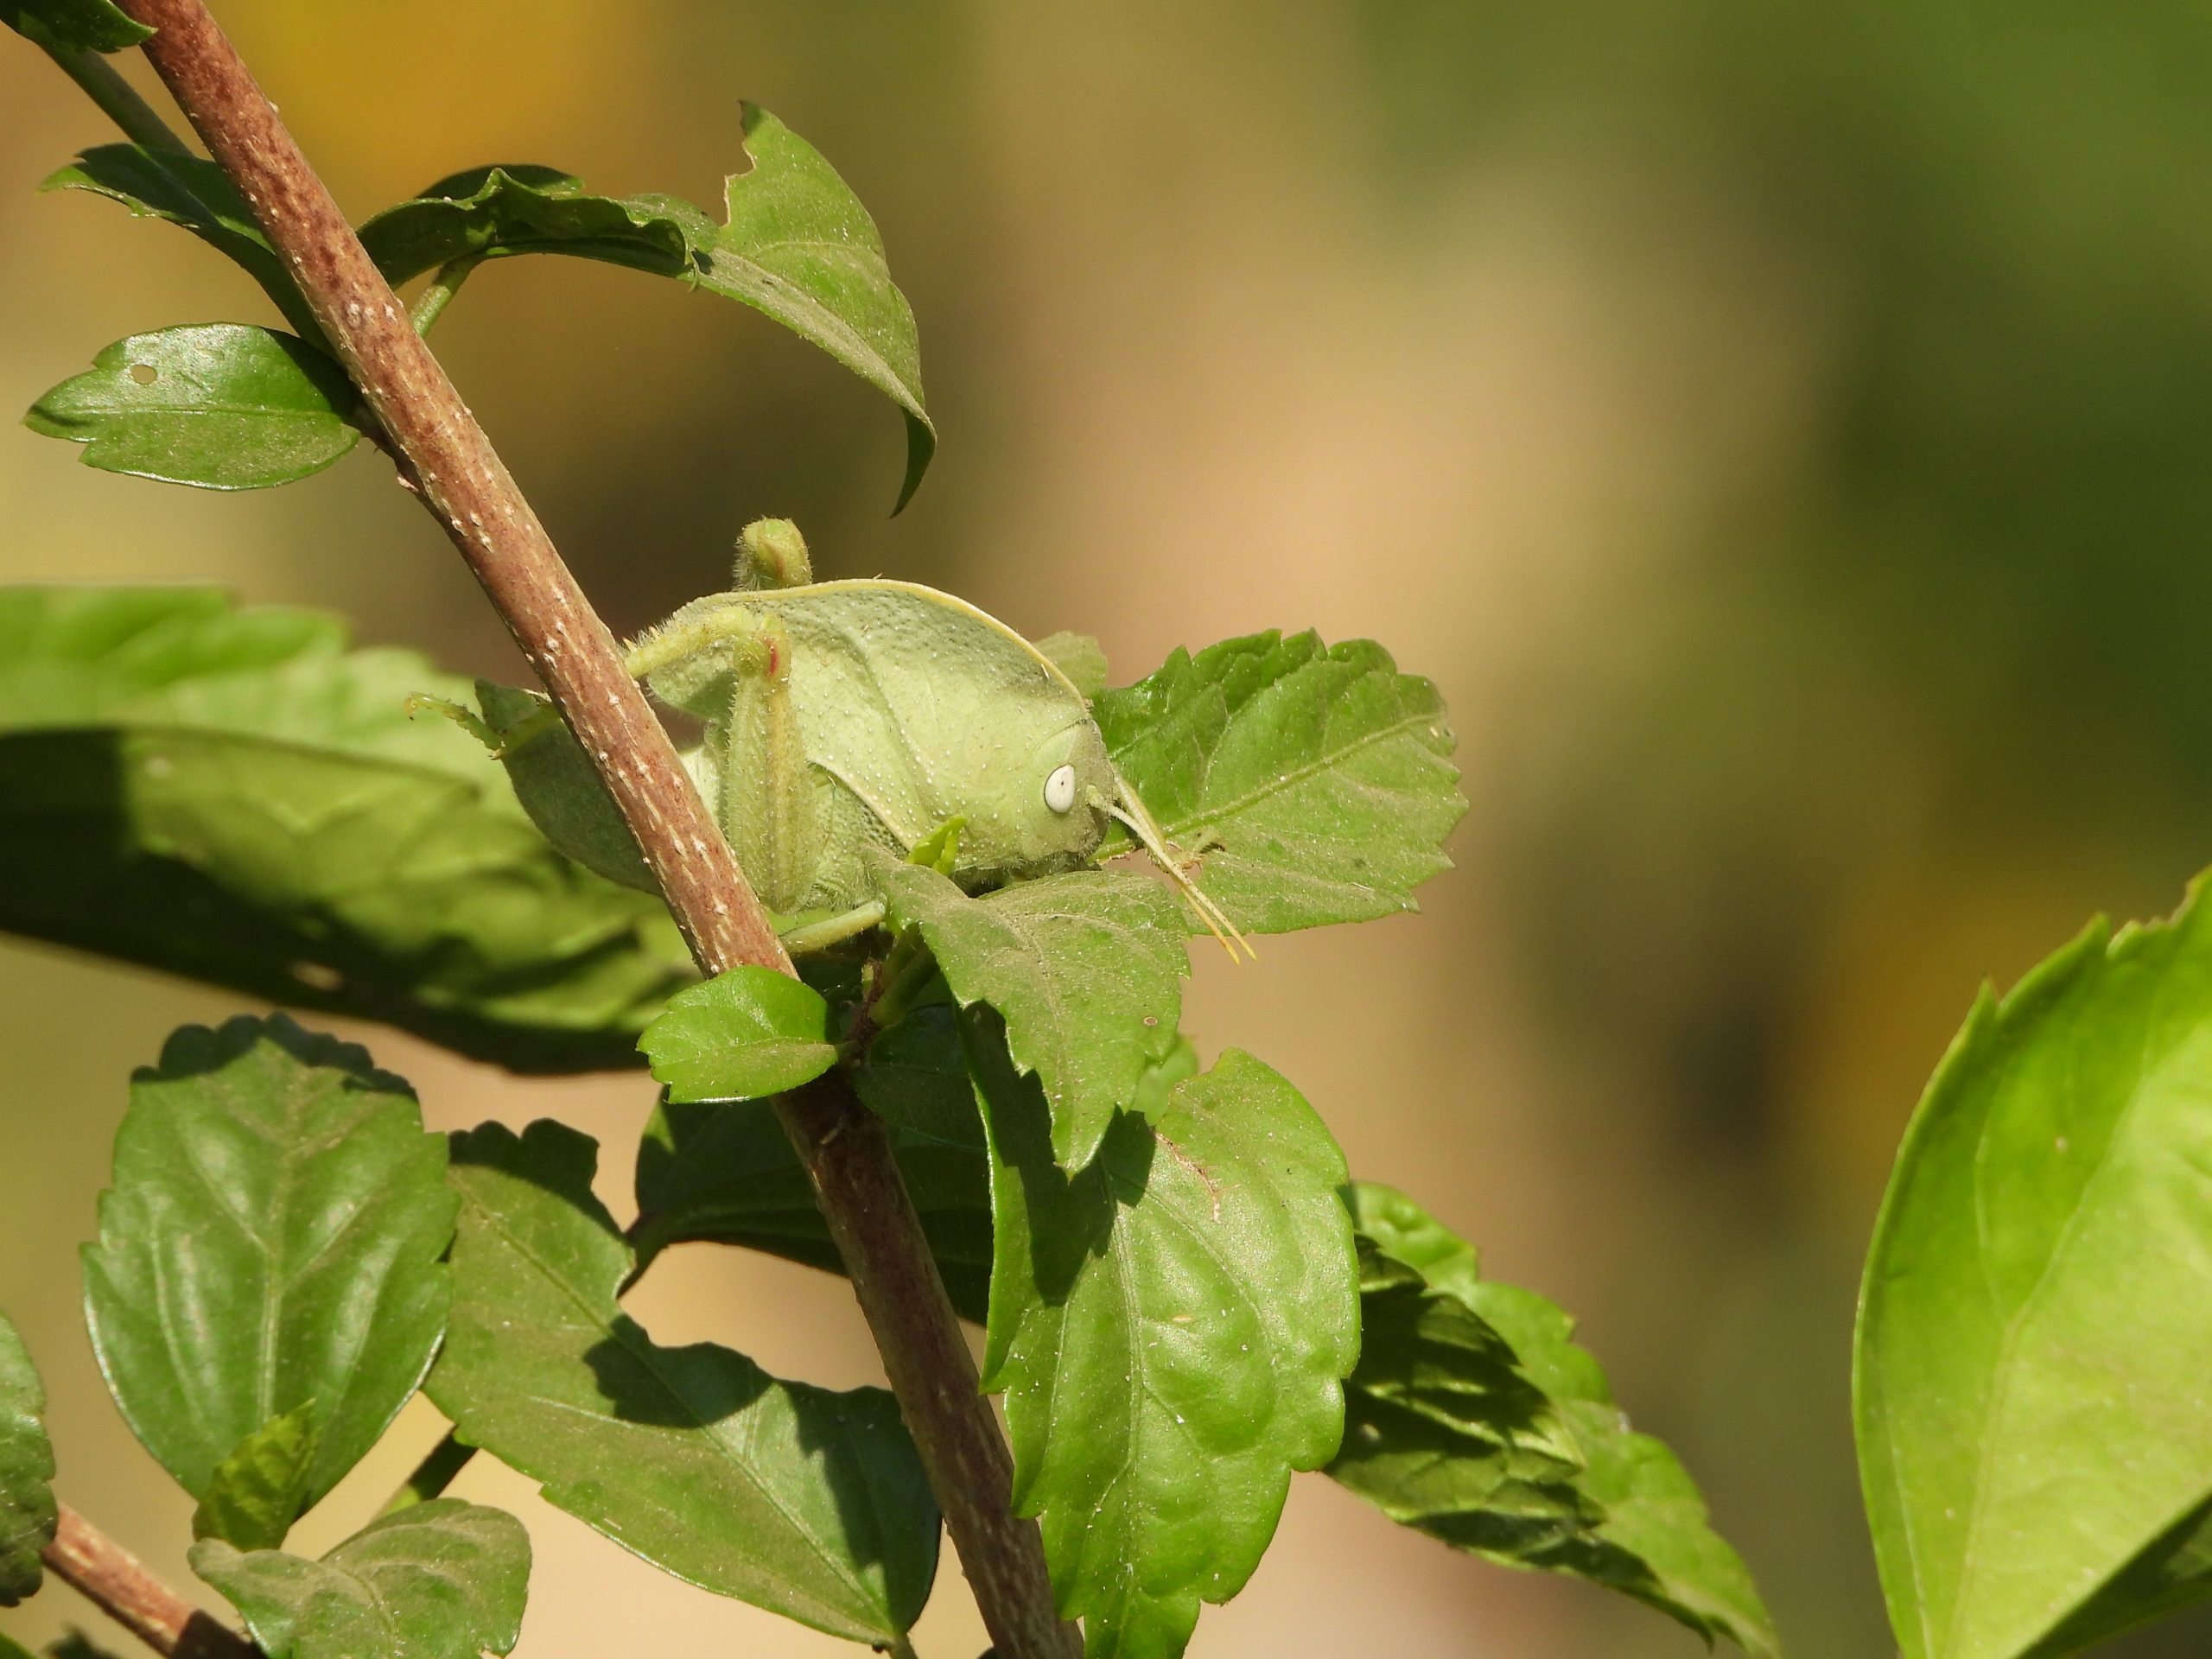 Grasshopper on the plant leaf